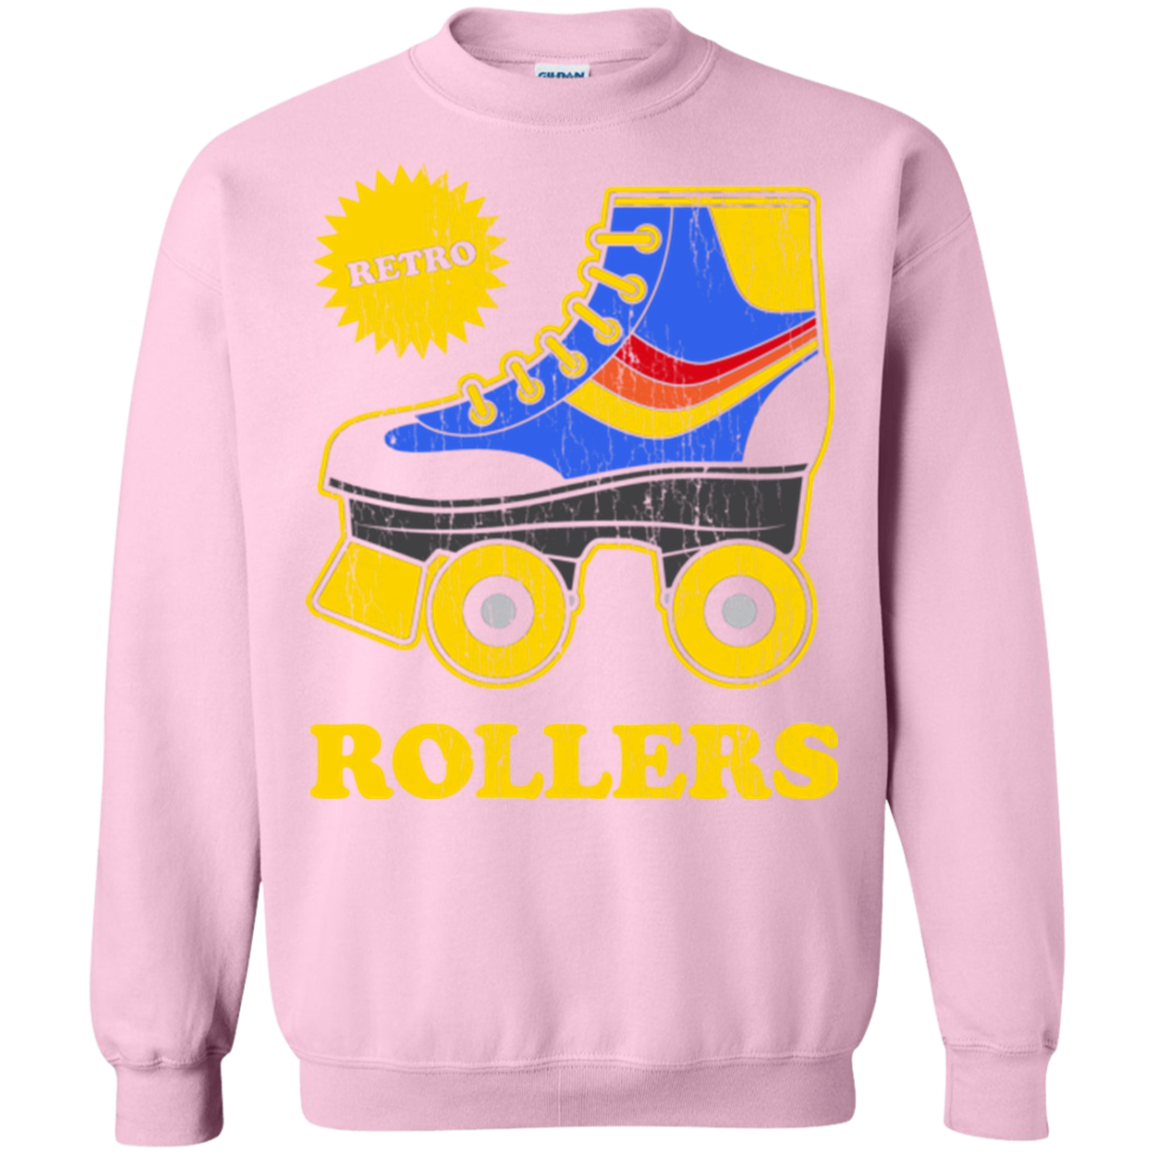 Retro rollers Crewneck Sweatshirt